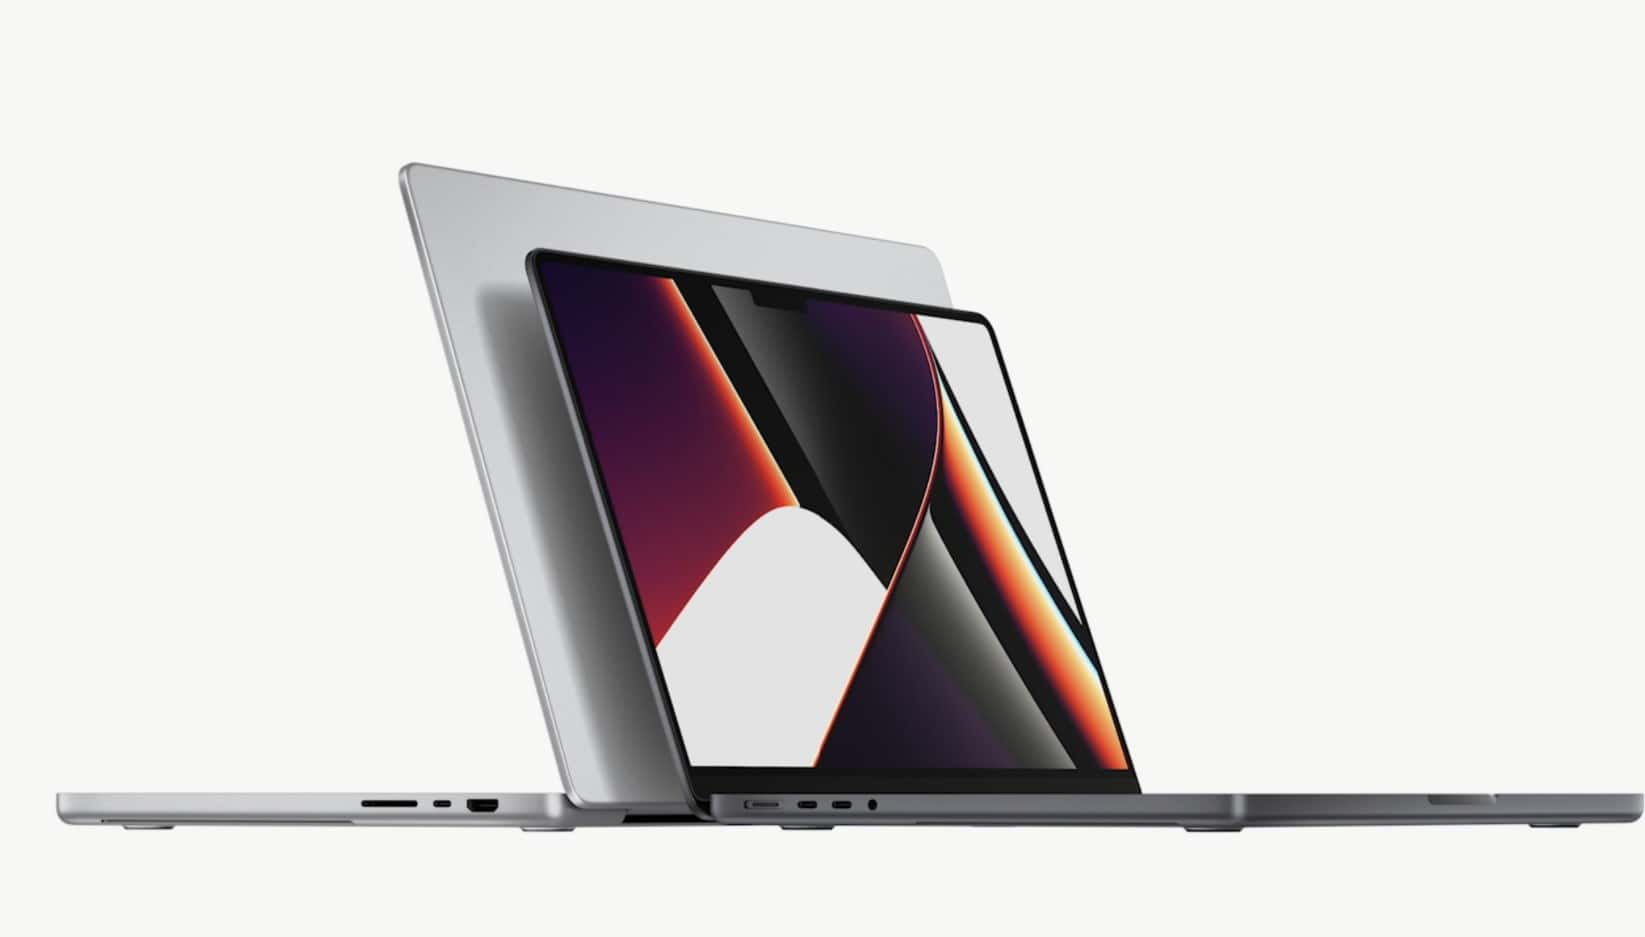 Apple announces new MacBook Pro powered by M1 Pro processor